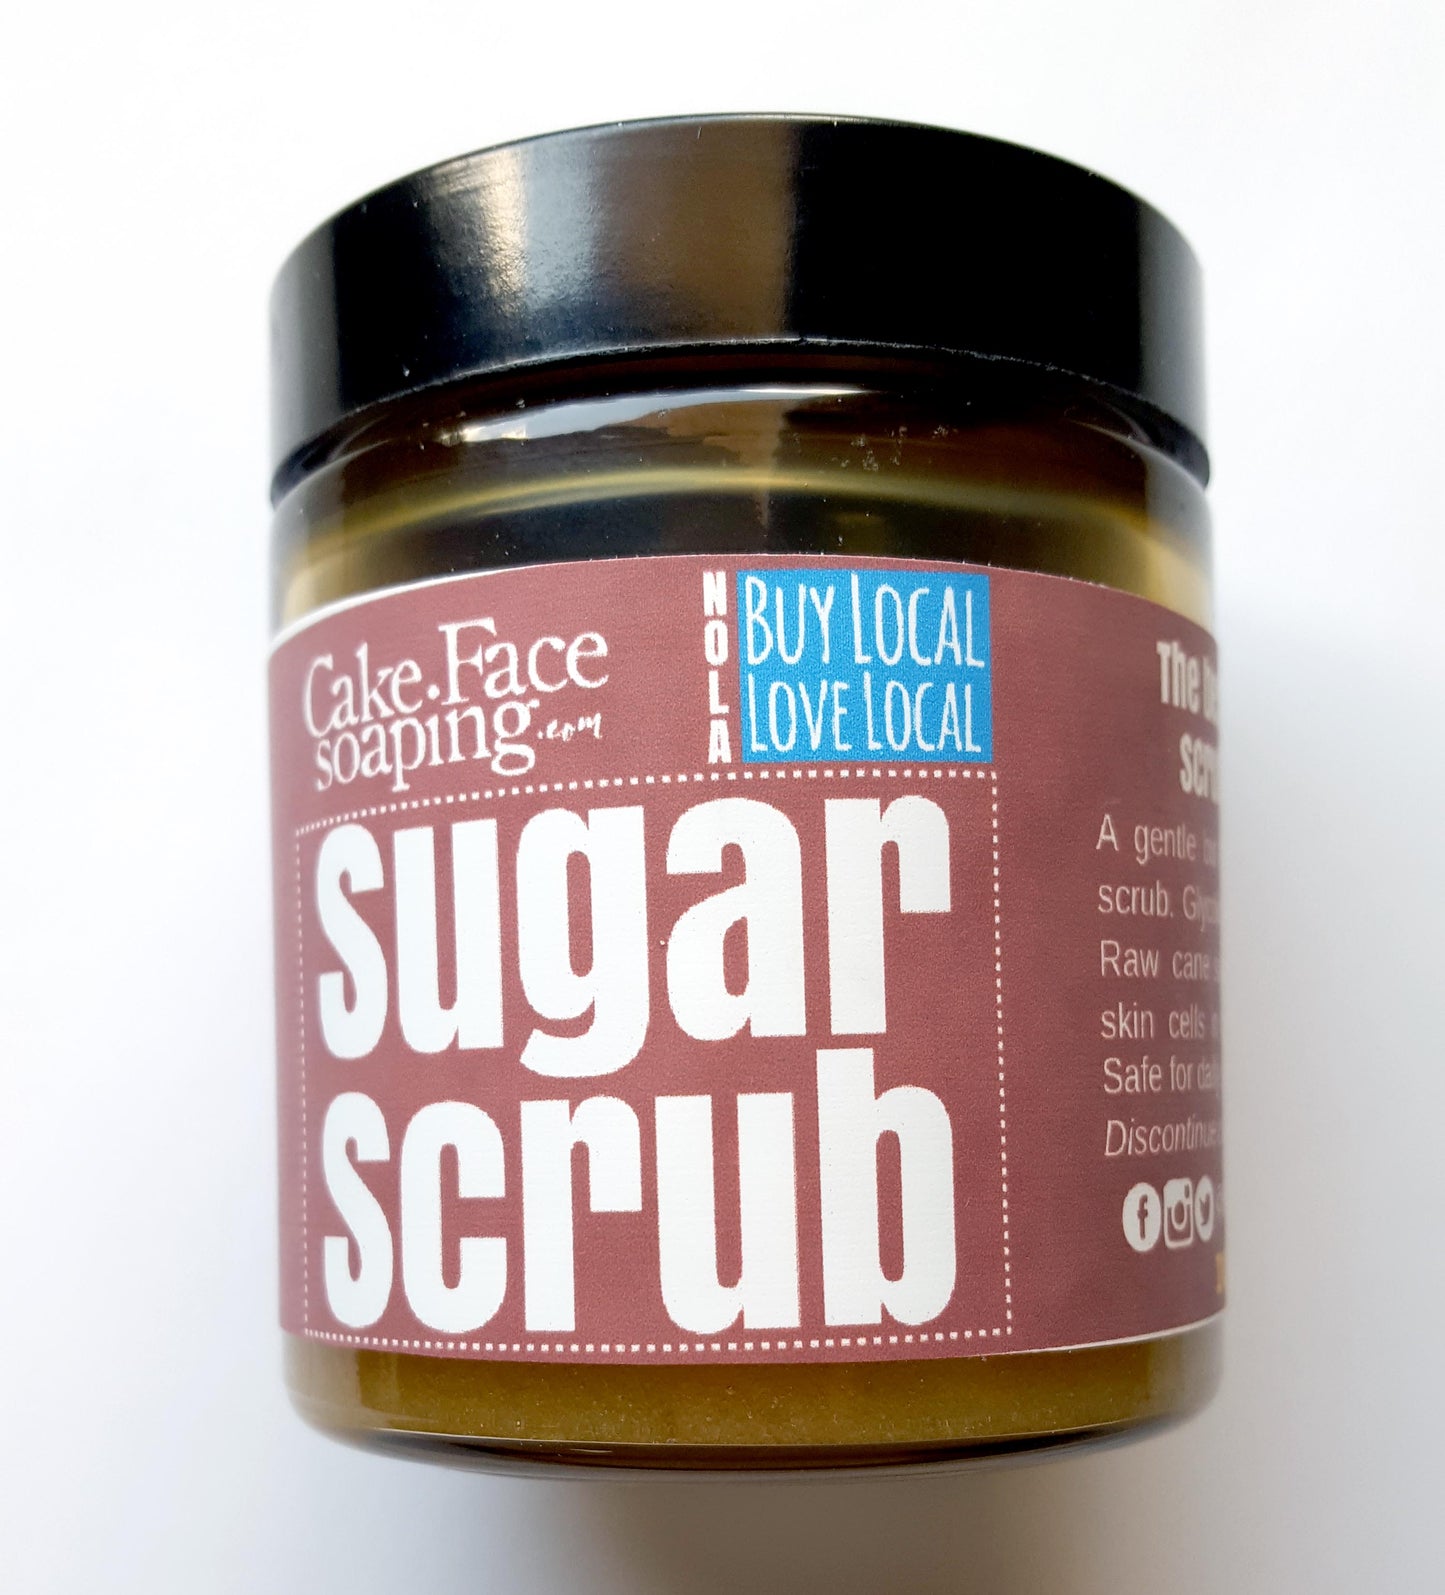 Sugar scrub - CakeFaceSoaping